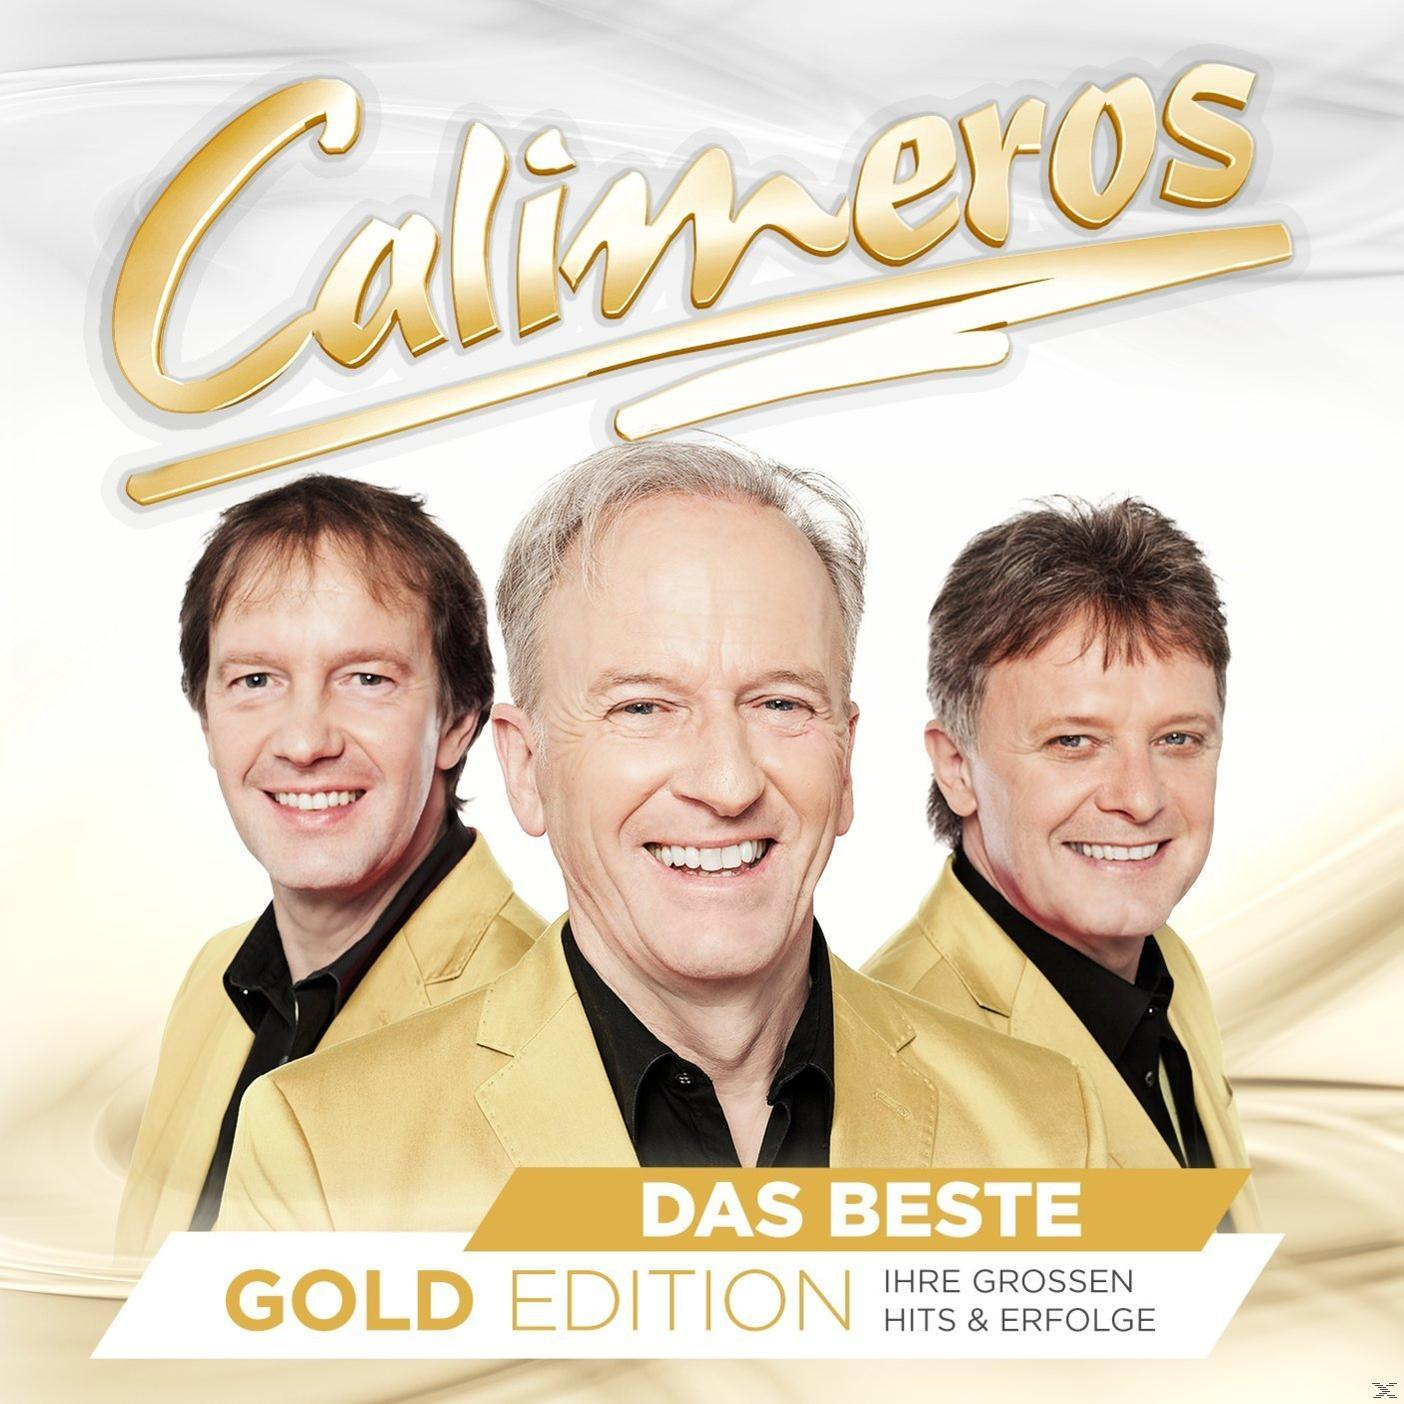 Calimeros - Das - - (CD) Gold-Edition Beste